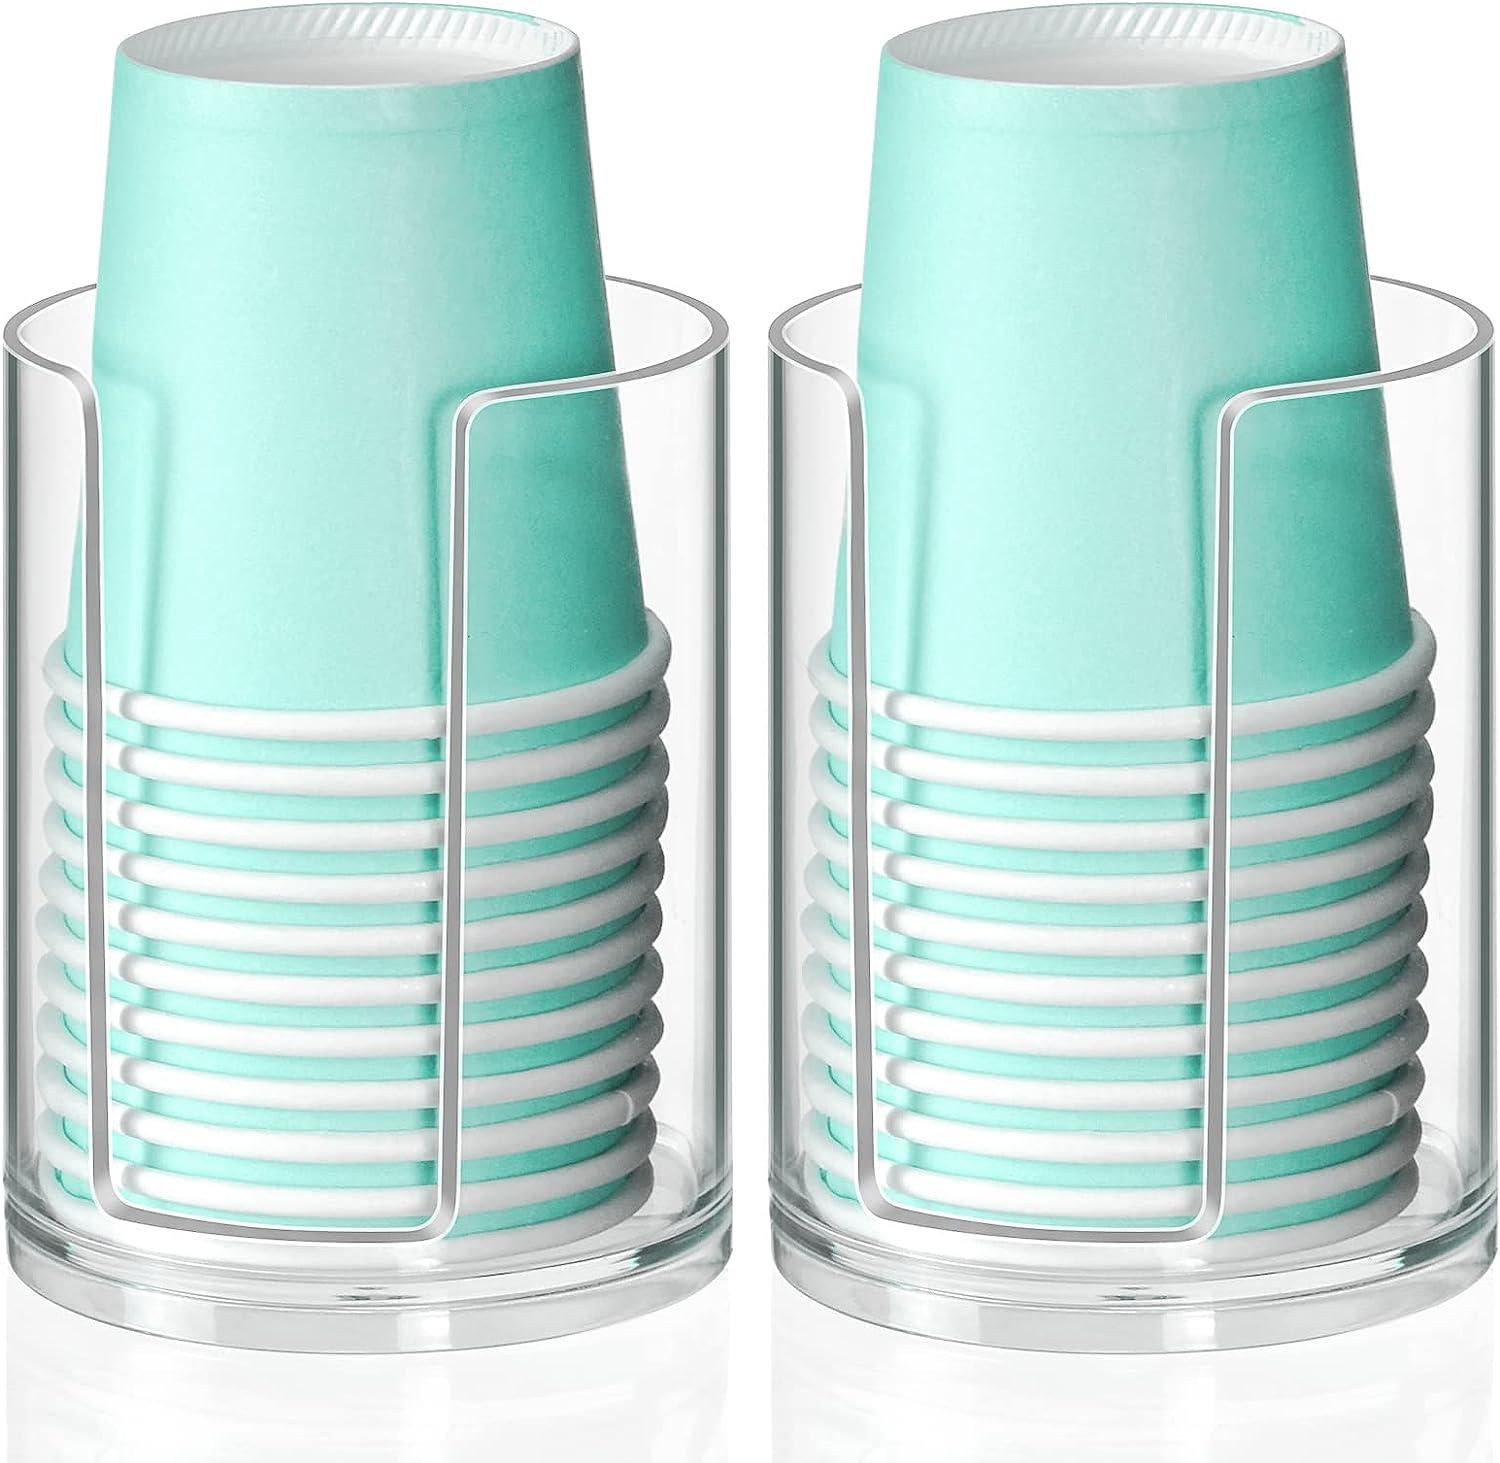 Dispensador de vasos de baño, soporte desechable para vasos de enjuague bucal - VIRTUAL MUEBLES